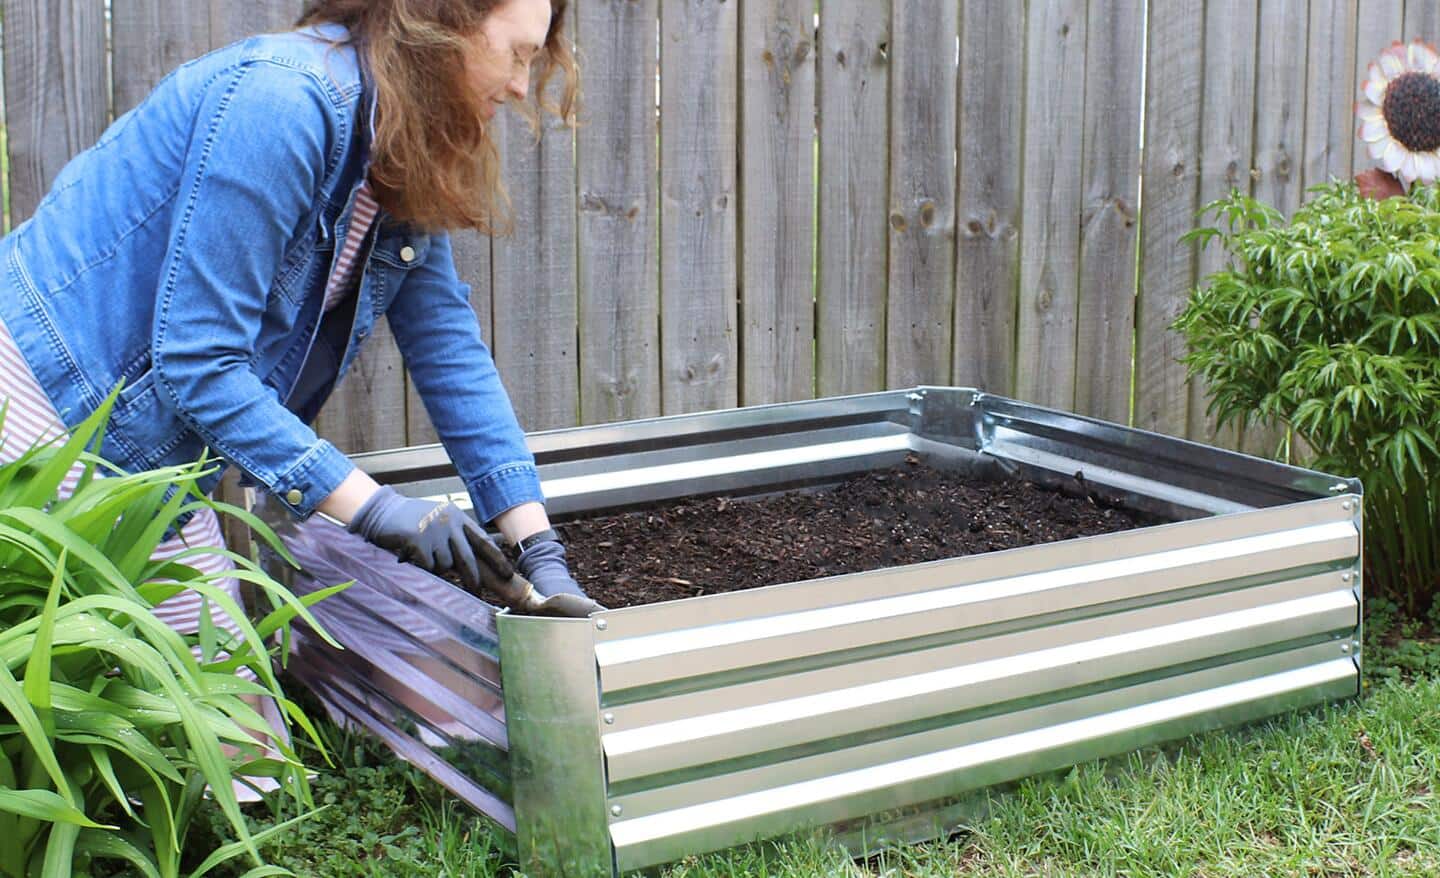 Gardener placing soil in raised garden bed